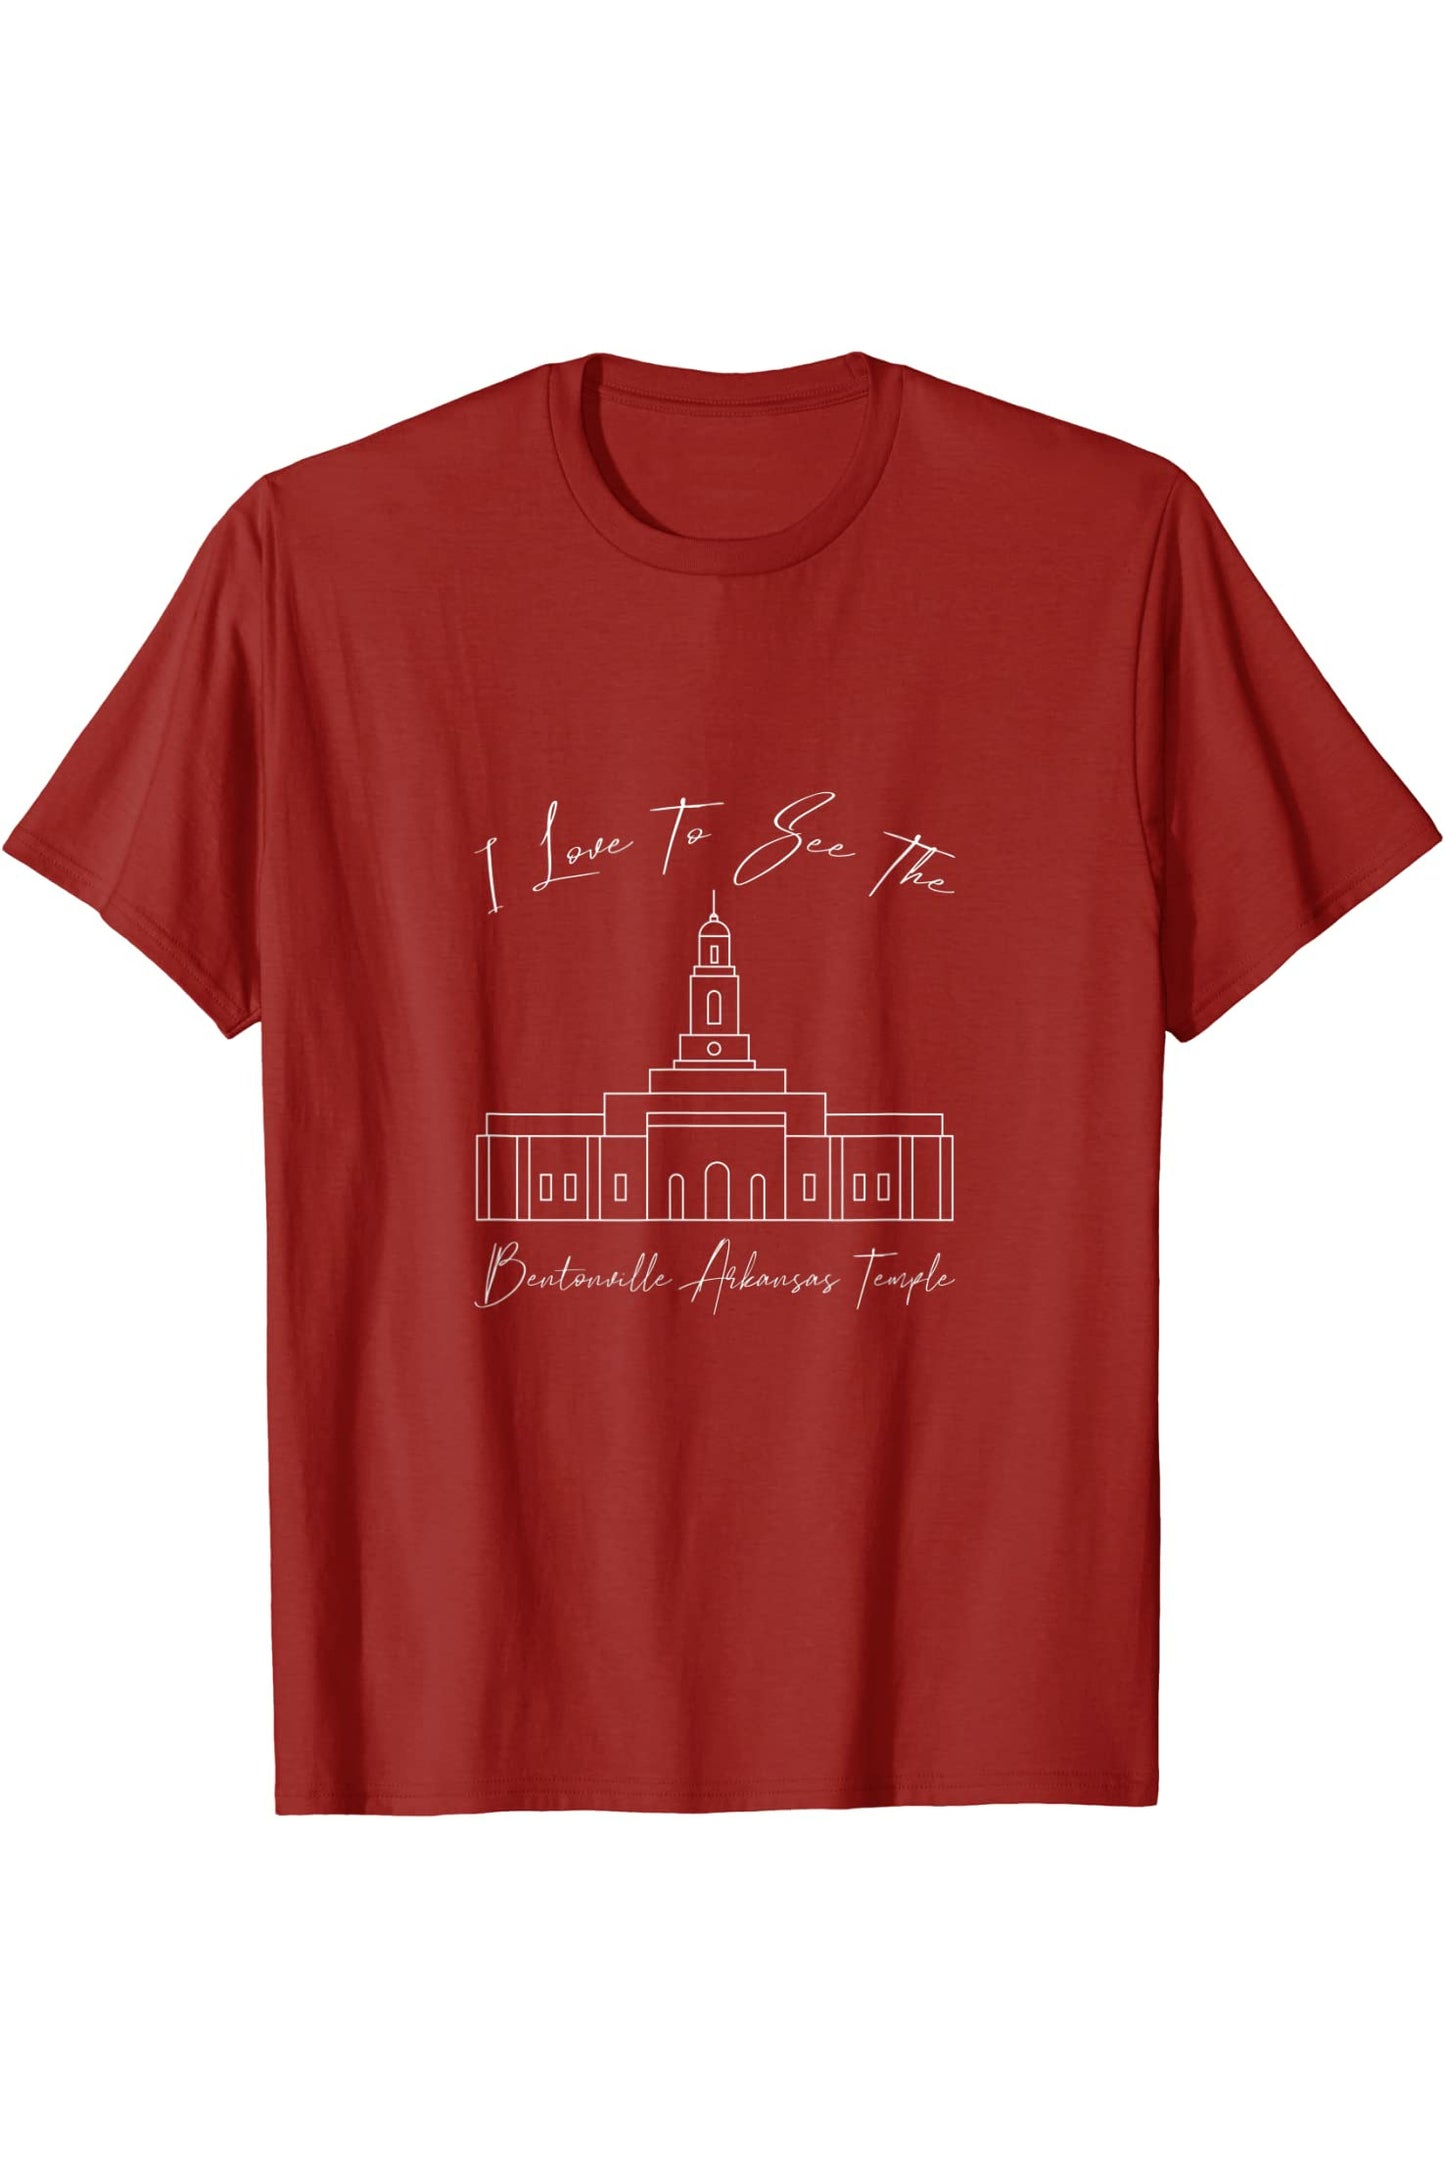 Bentonville Arkansas Temple T-Shirt - Calligraphy Style (English) US